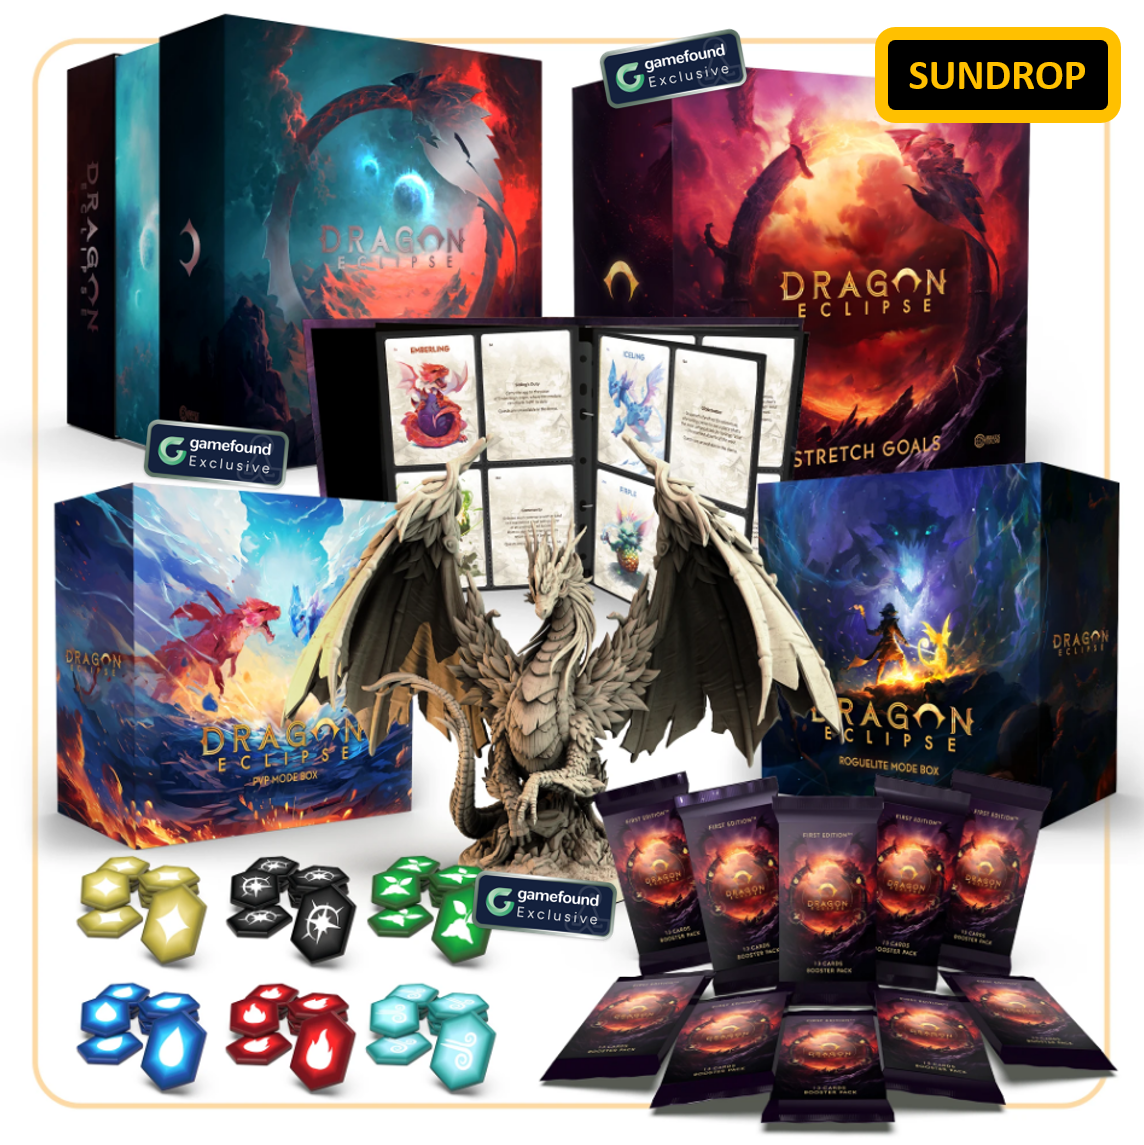 Gamefound Exclusive Dragon Eclipse Board Game Special Edition, Sundrop Edition